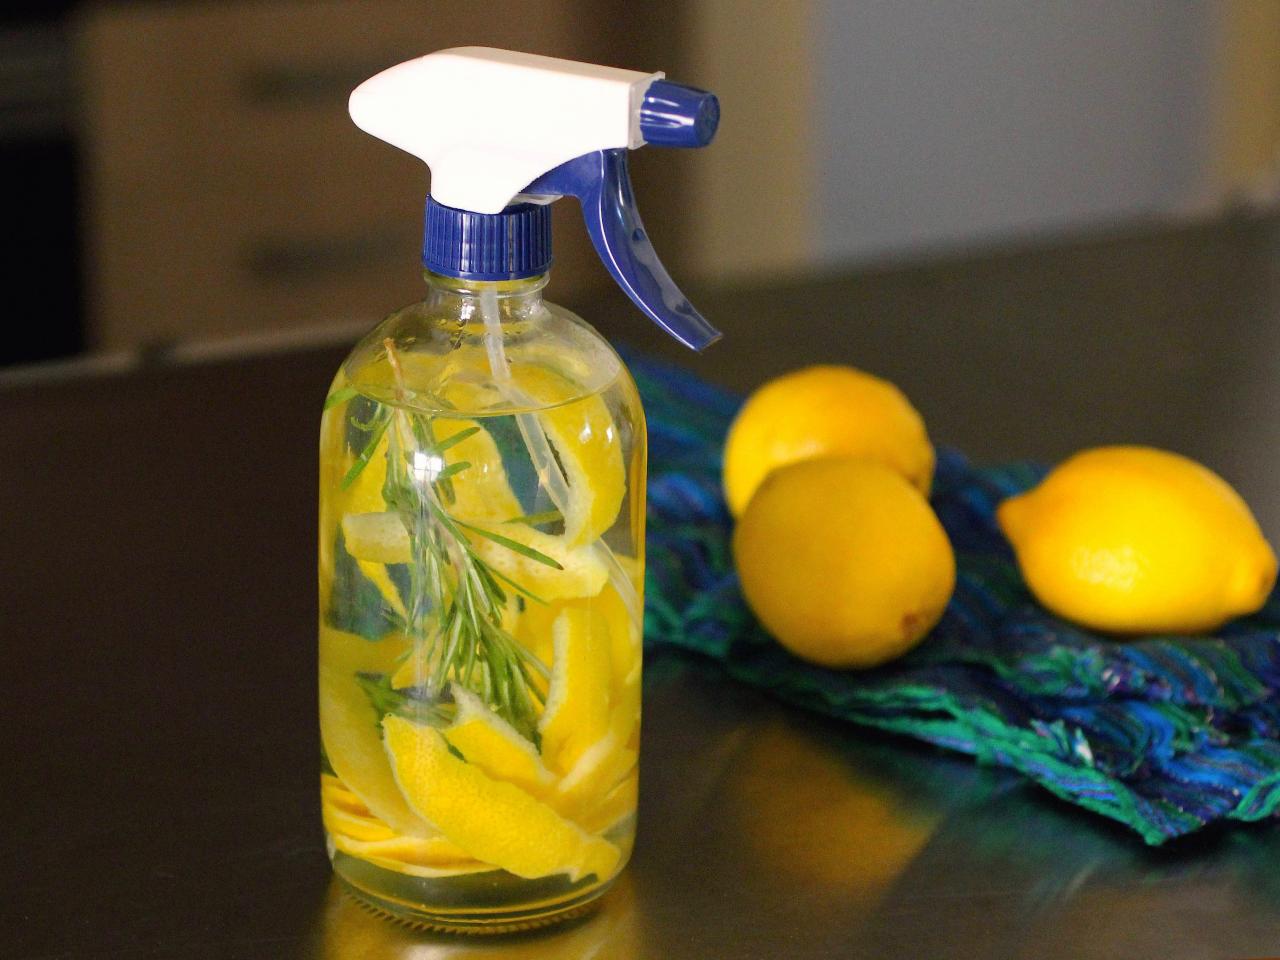 Rosemary-Lemon Natural Cleaning Spray